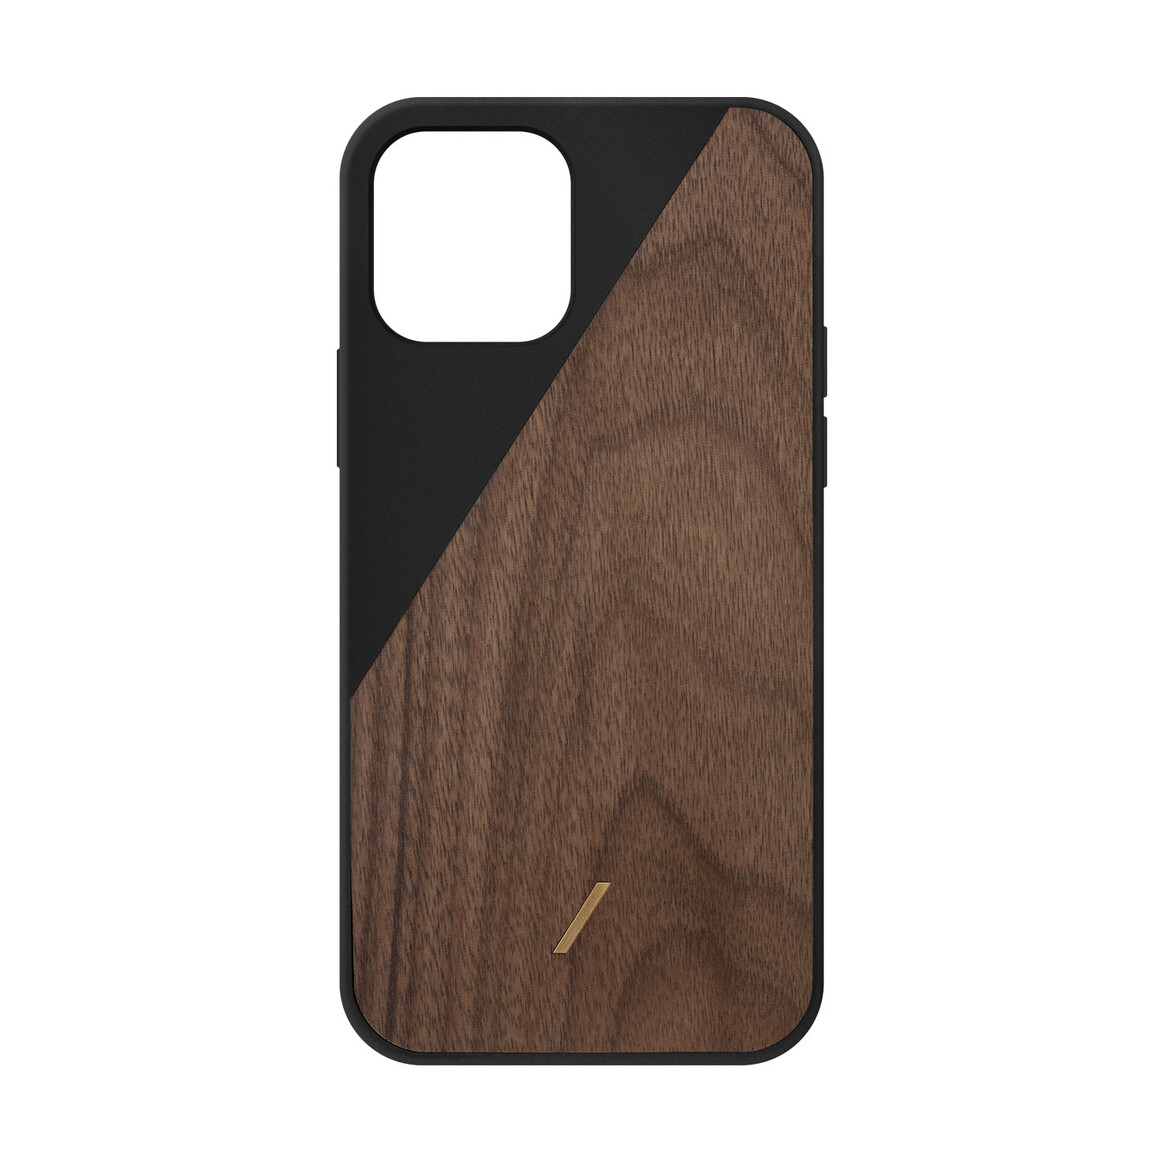 <h1>Native Union Clic Wooden Back Cover für iPhone 12 Pro Max, schwarz&gt;</h1>